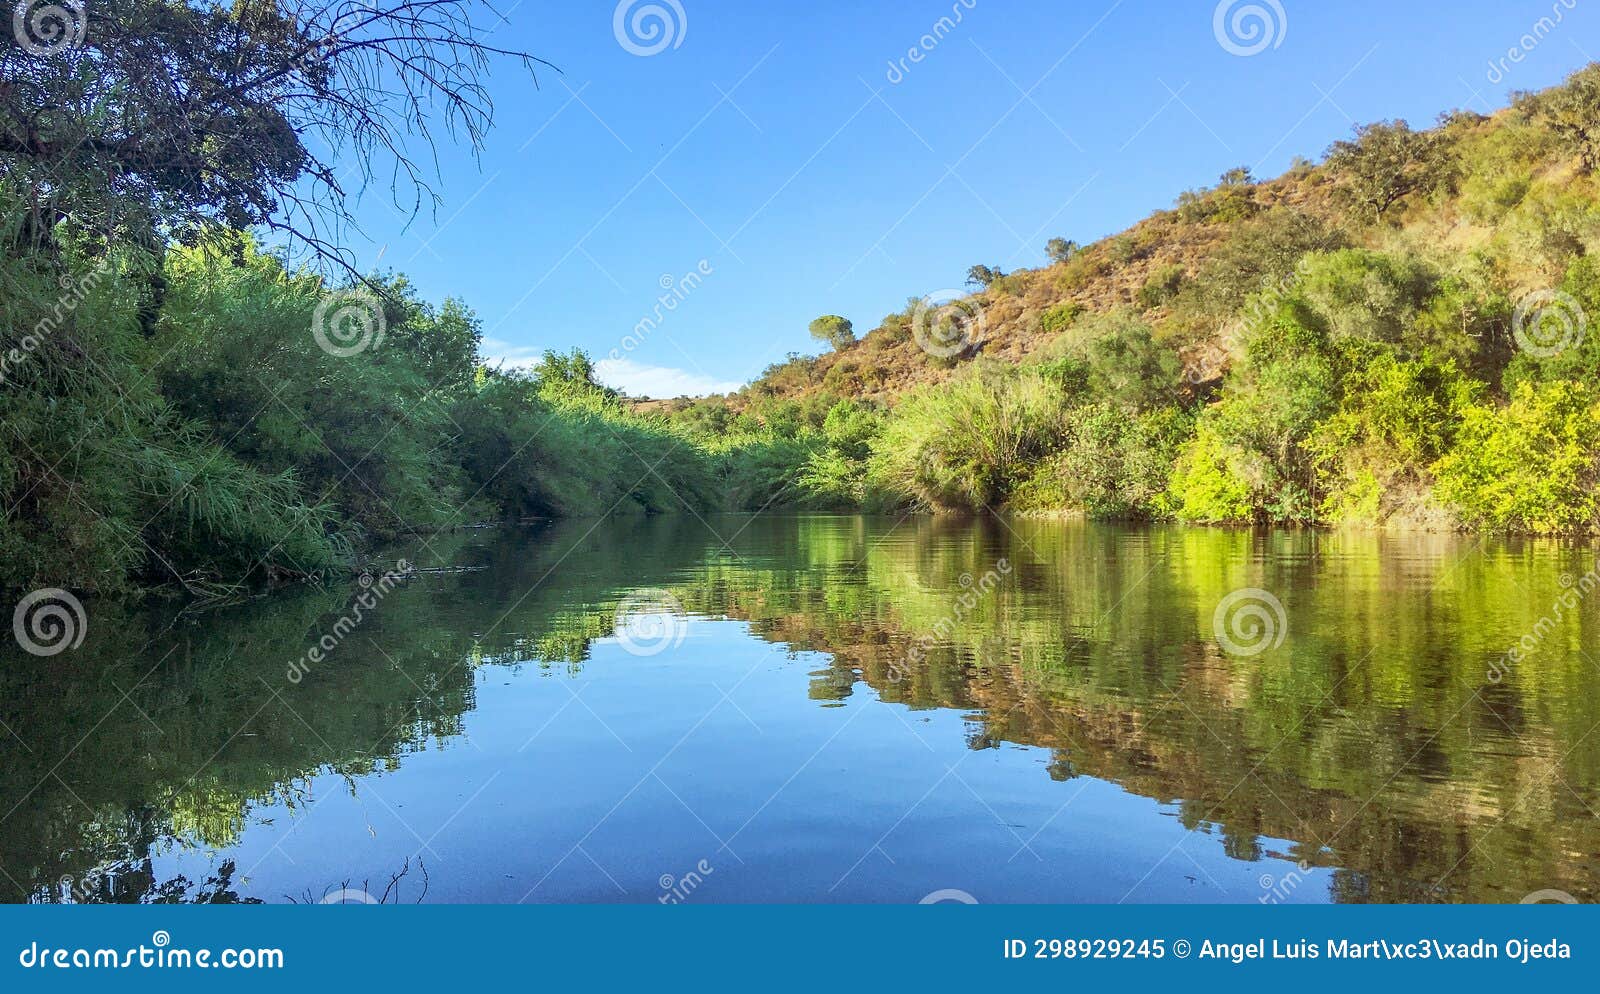 river lined with reeds in sanlucar de guadiana, huelva, spain.